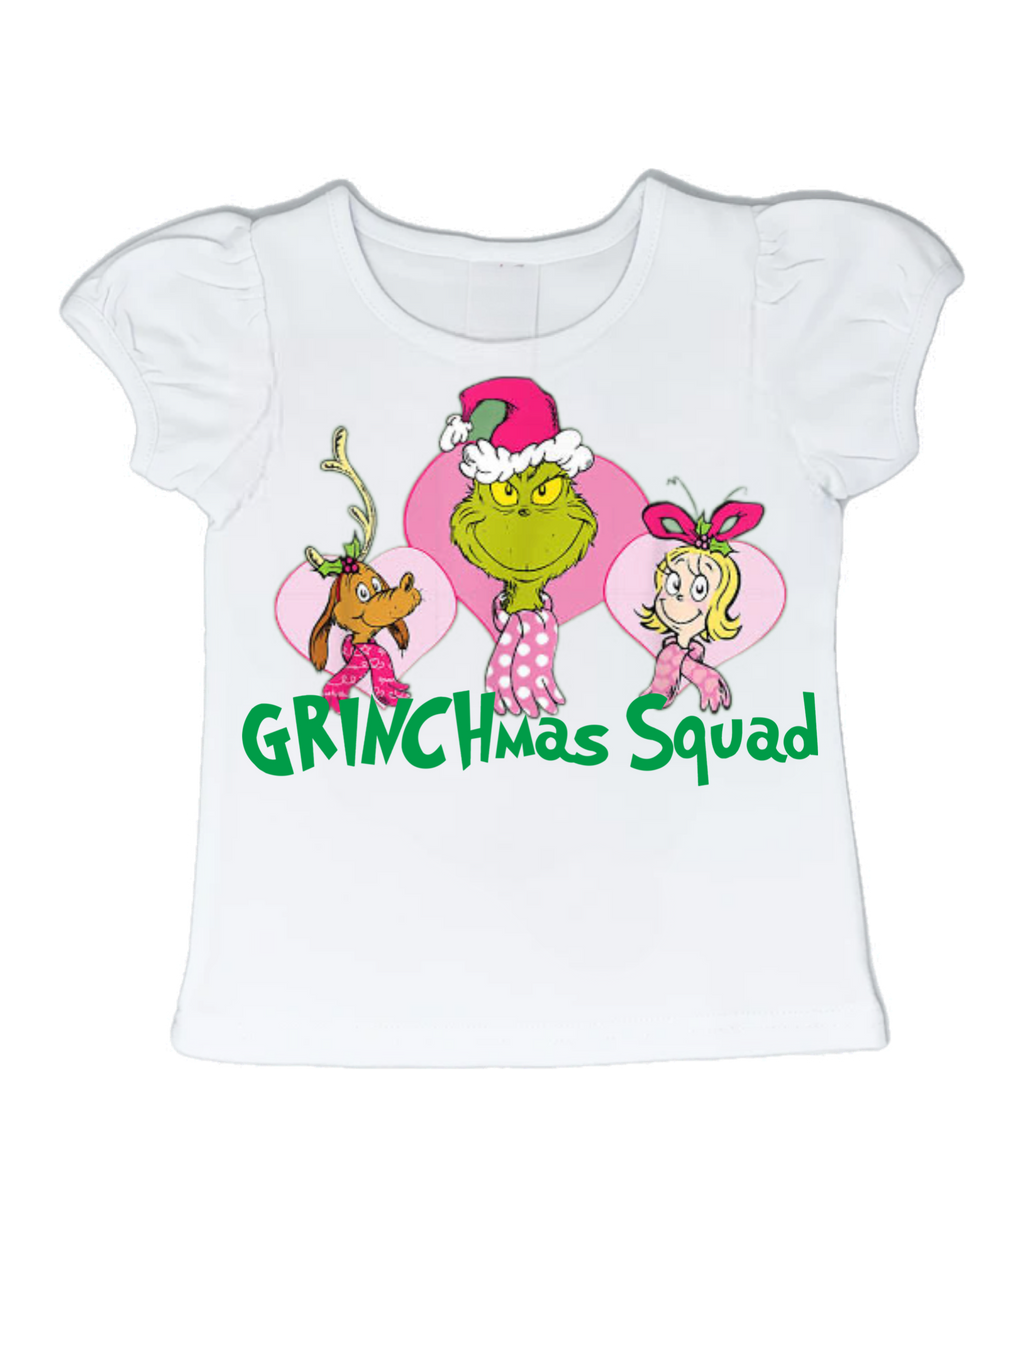 Christmas Tee GRINCH squad